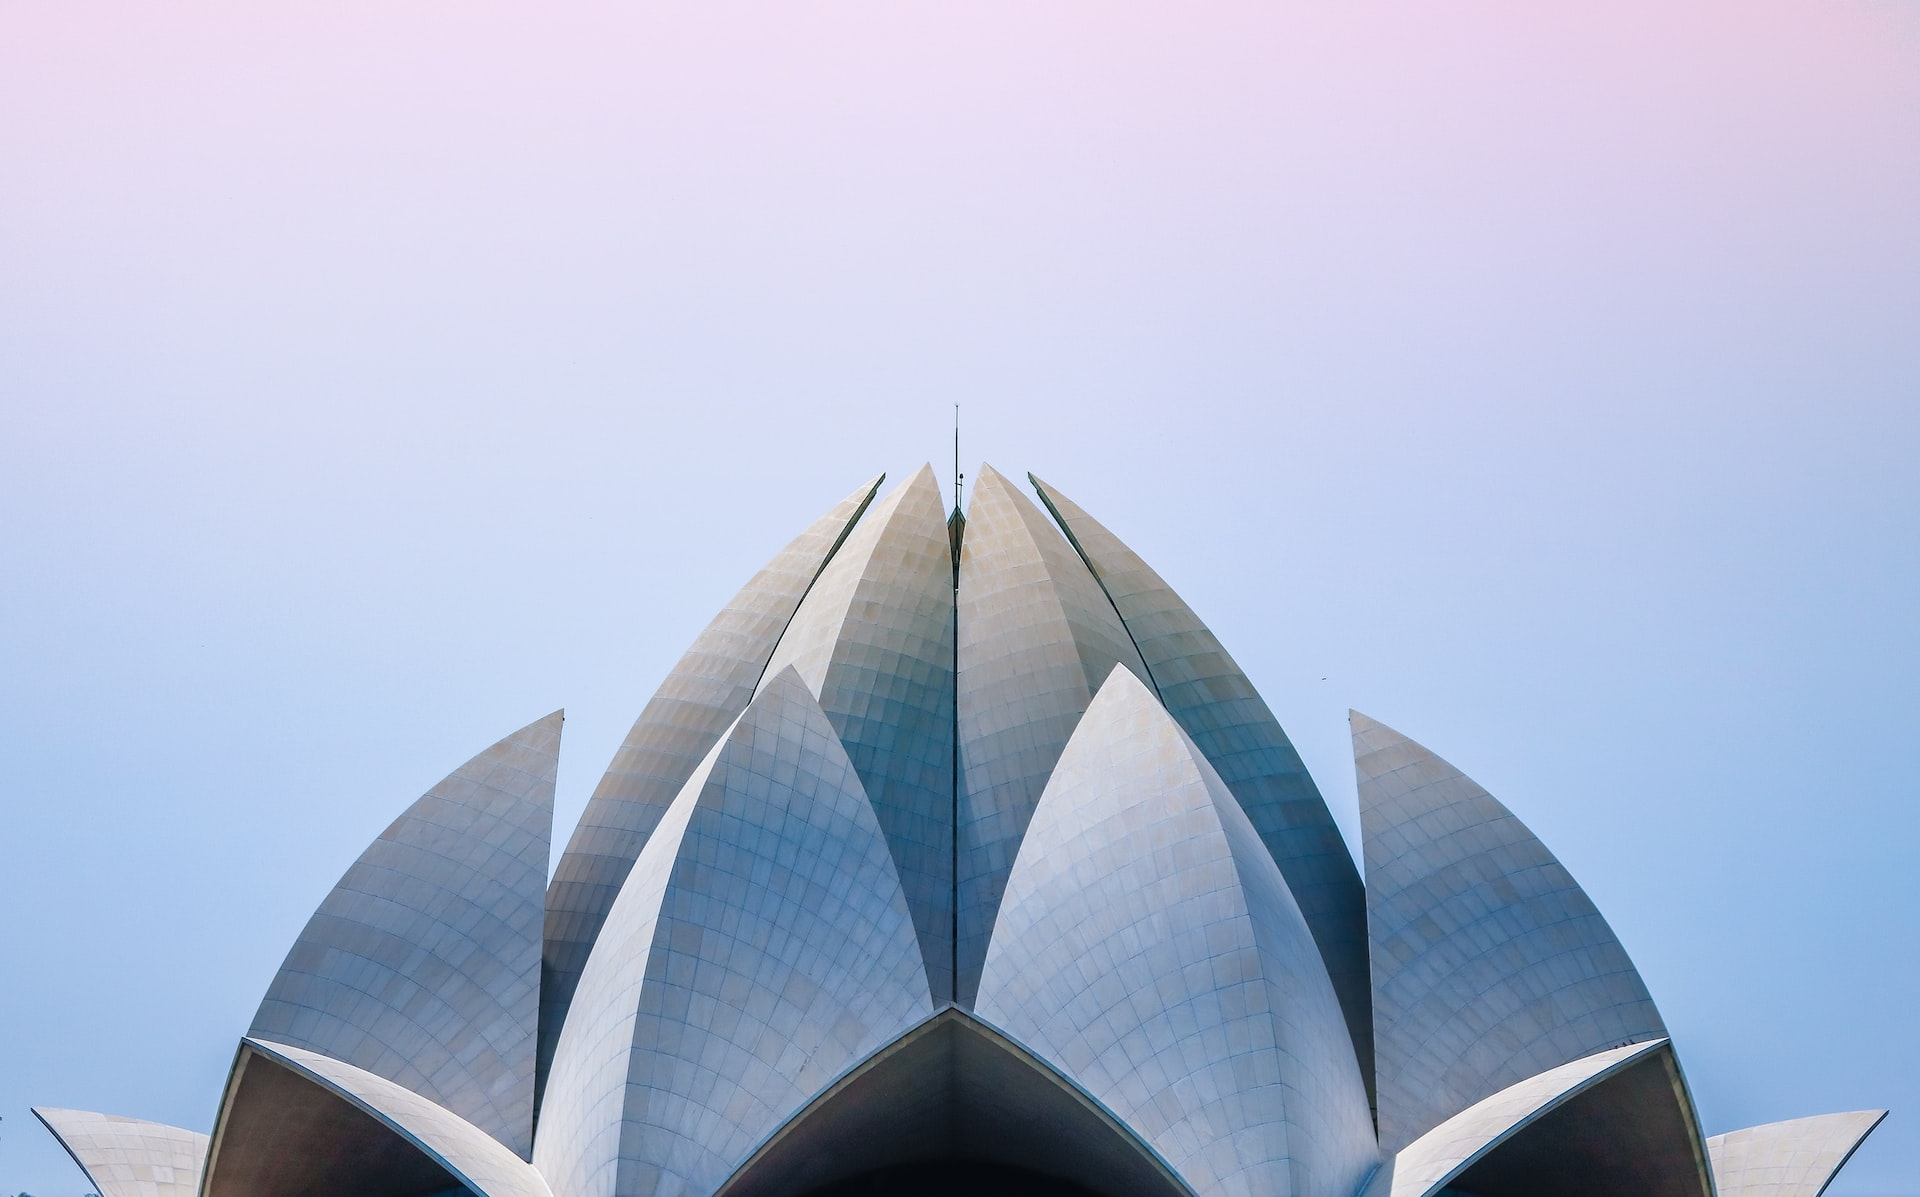 The lotus temple in Delhi